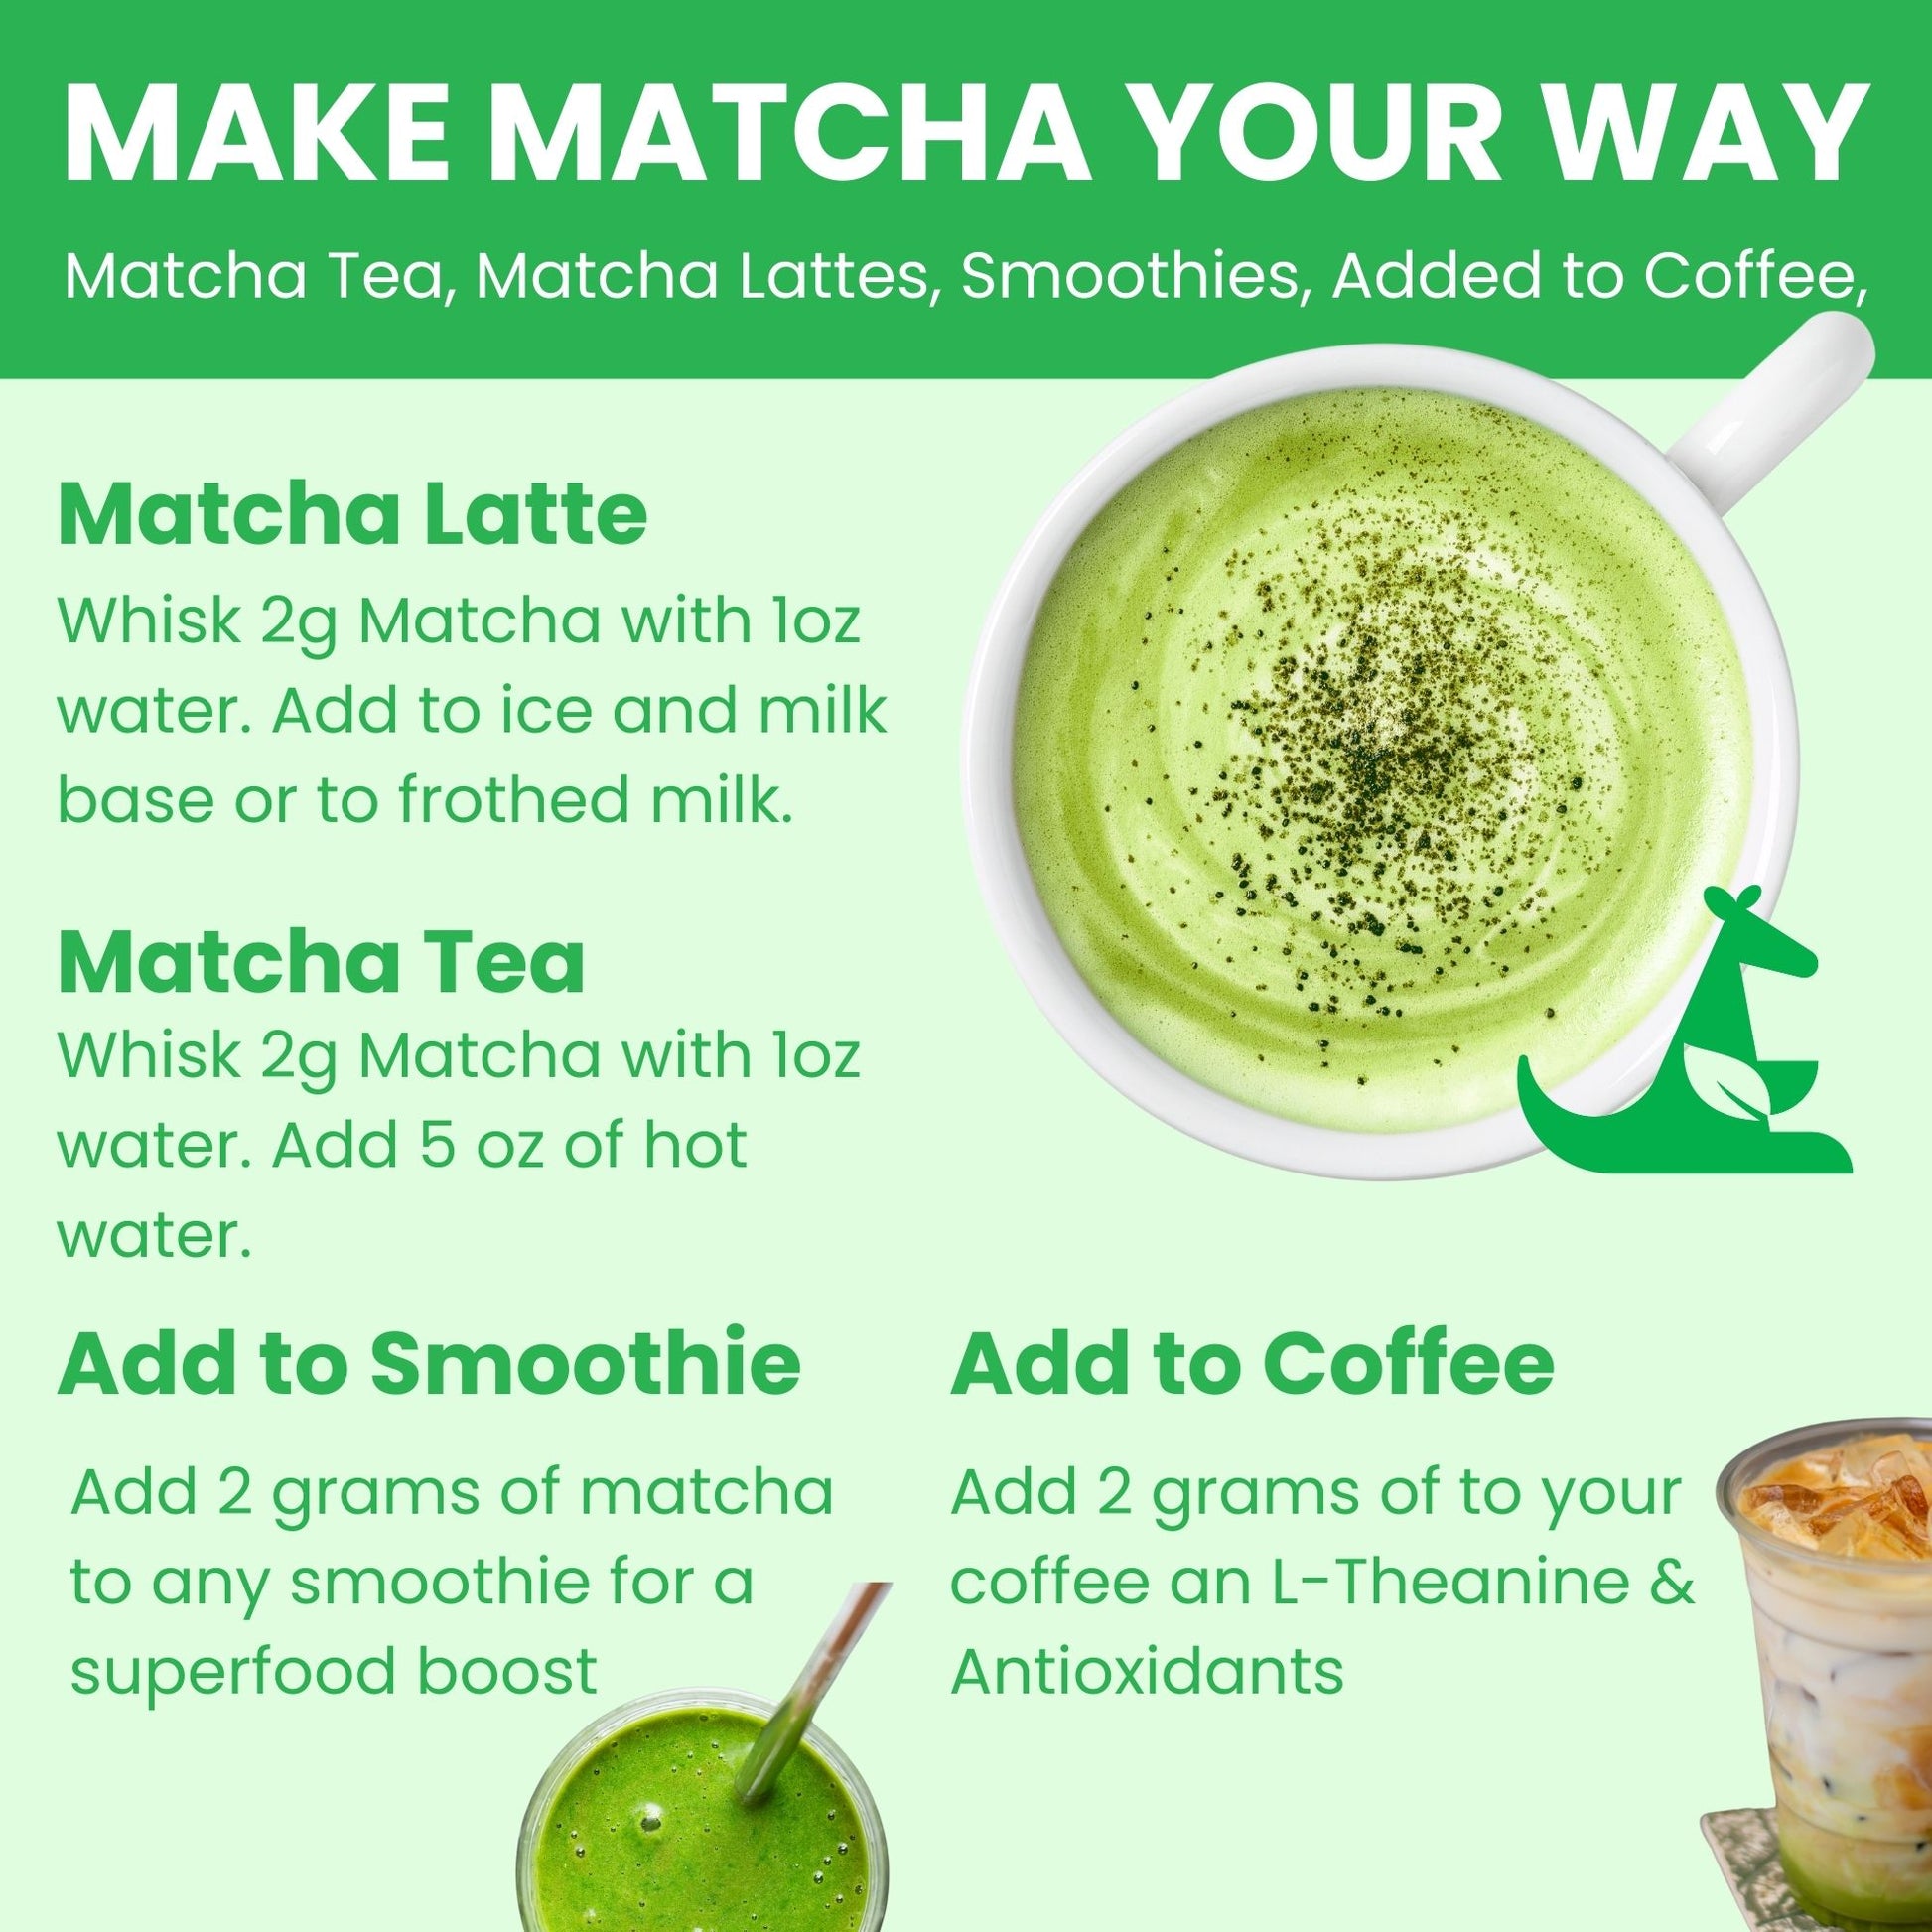 Premium Photo  Macha green ice green tea cup